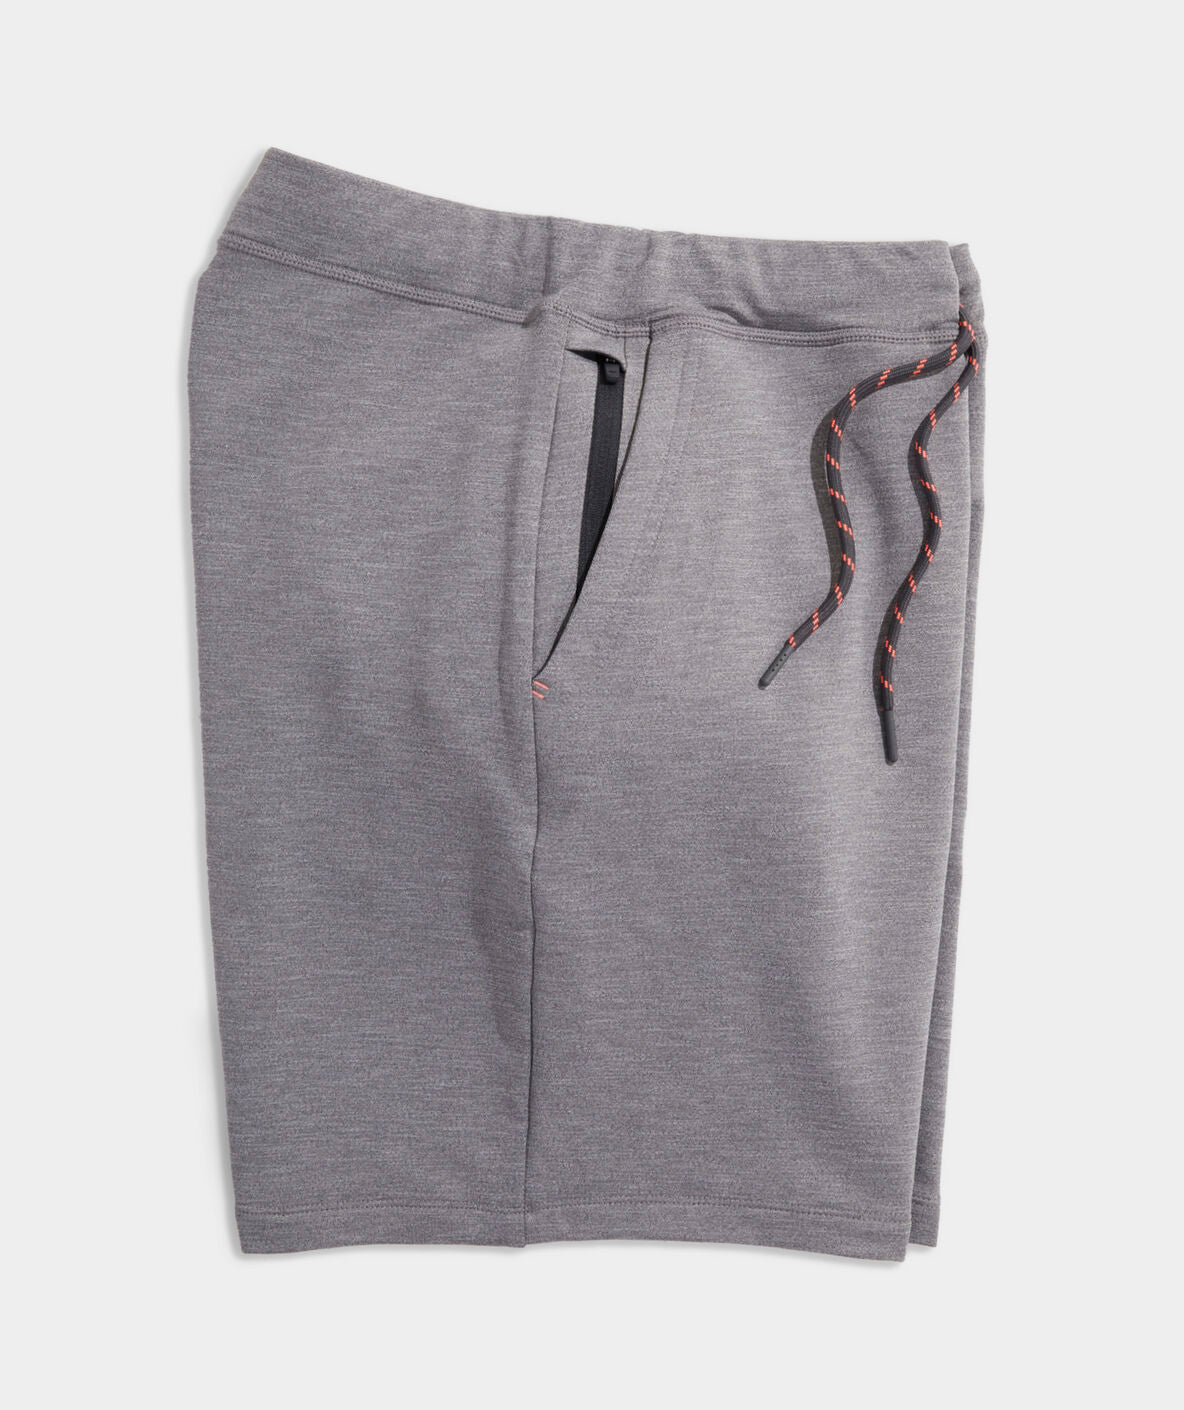 Vineyard Vines Men's 7 Inch On-The-Go Knit Shorts - NOCTURNE